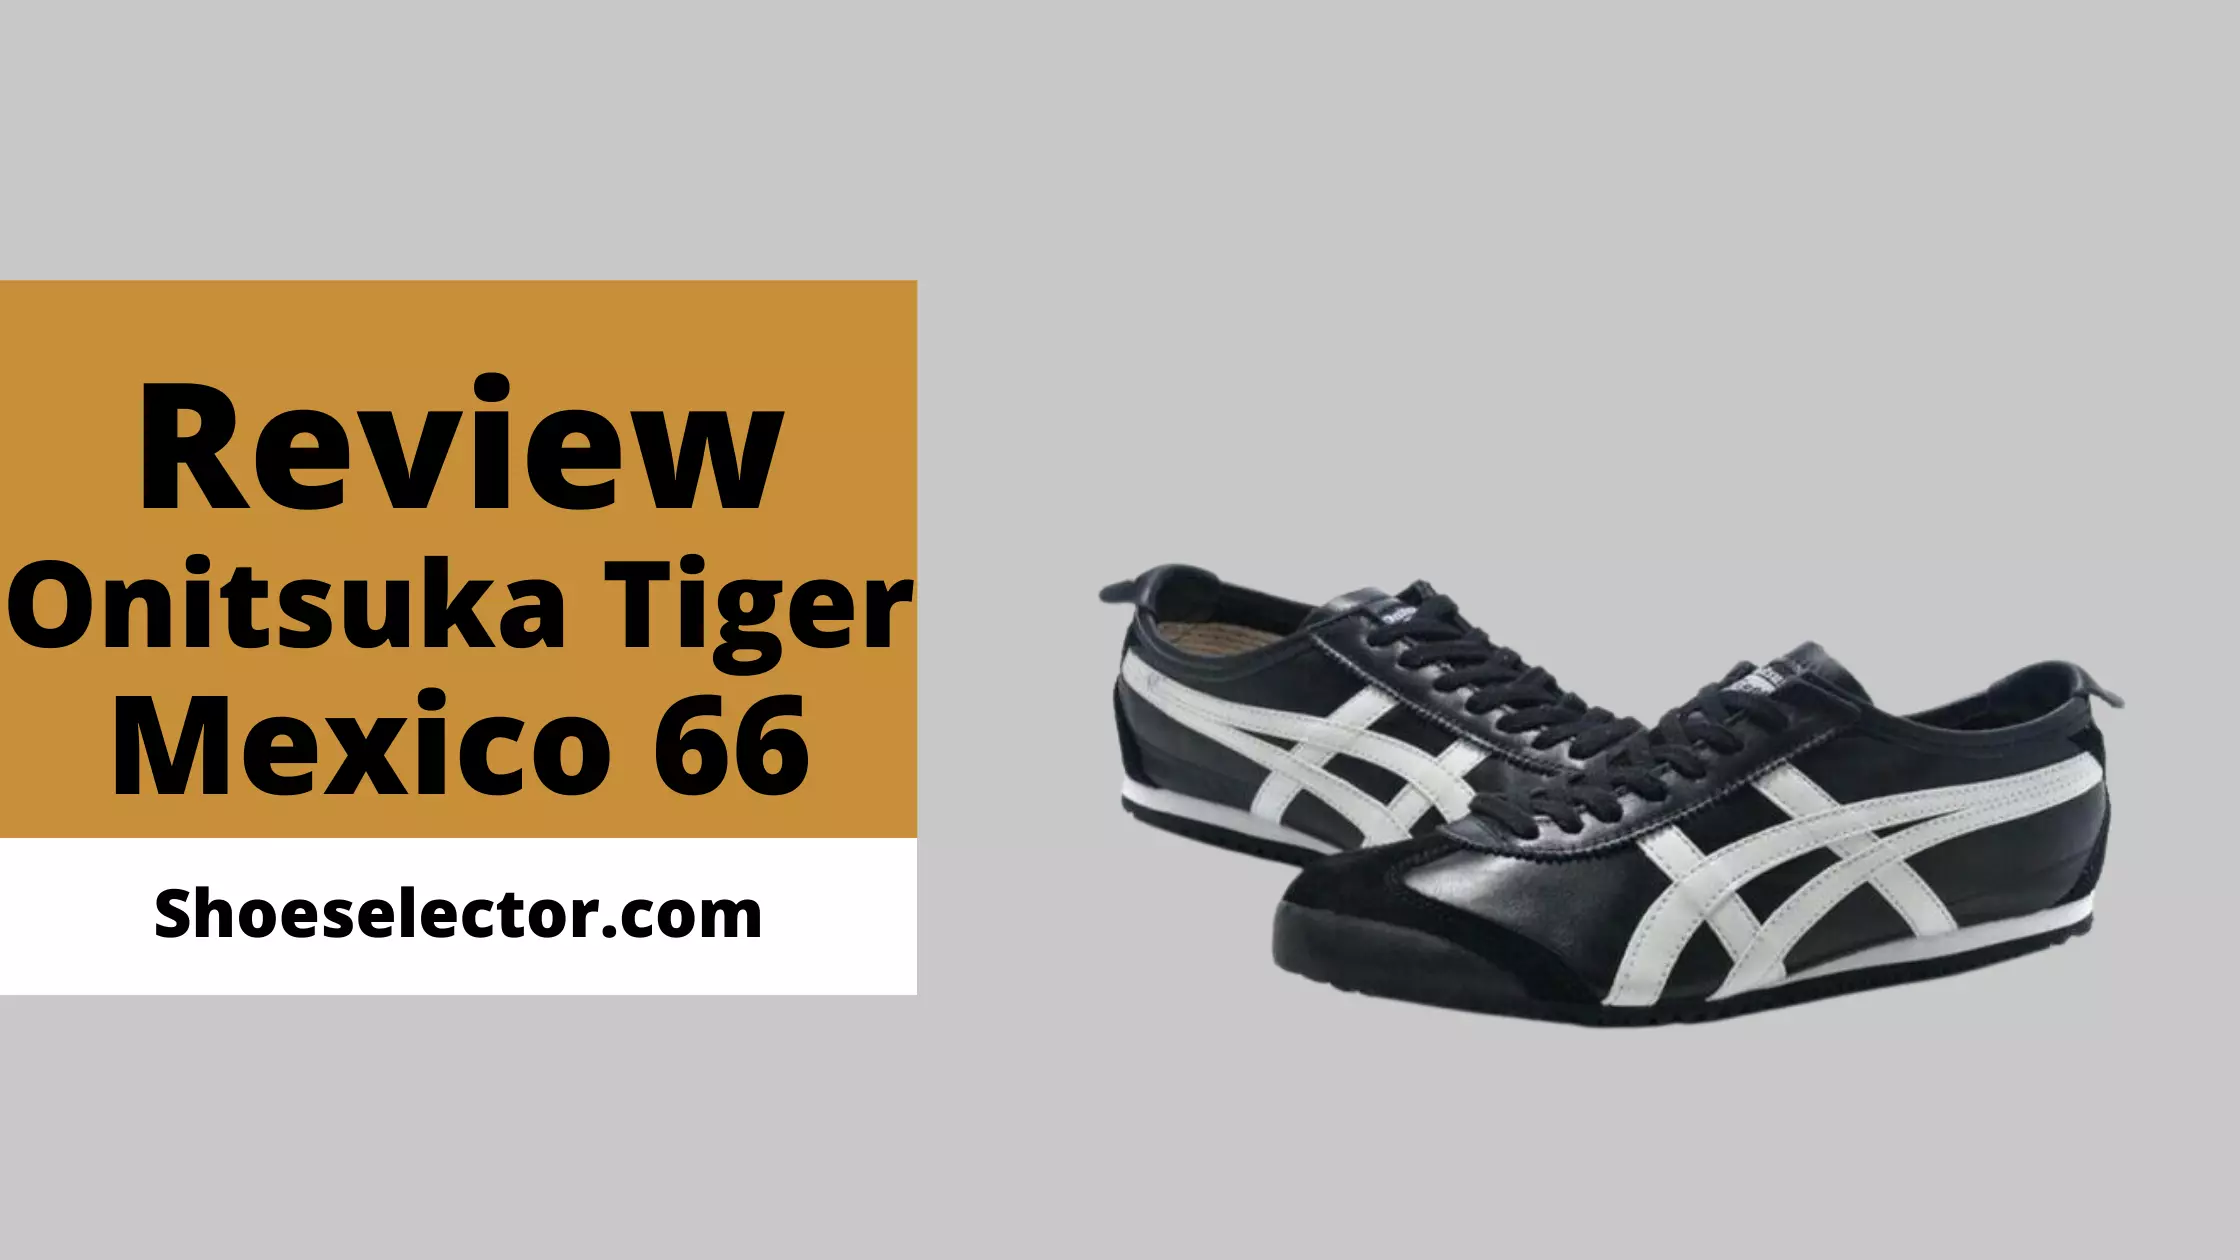 Onitsuka Tiger Mexico 66 Review